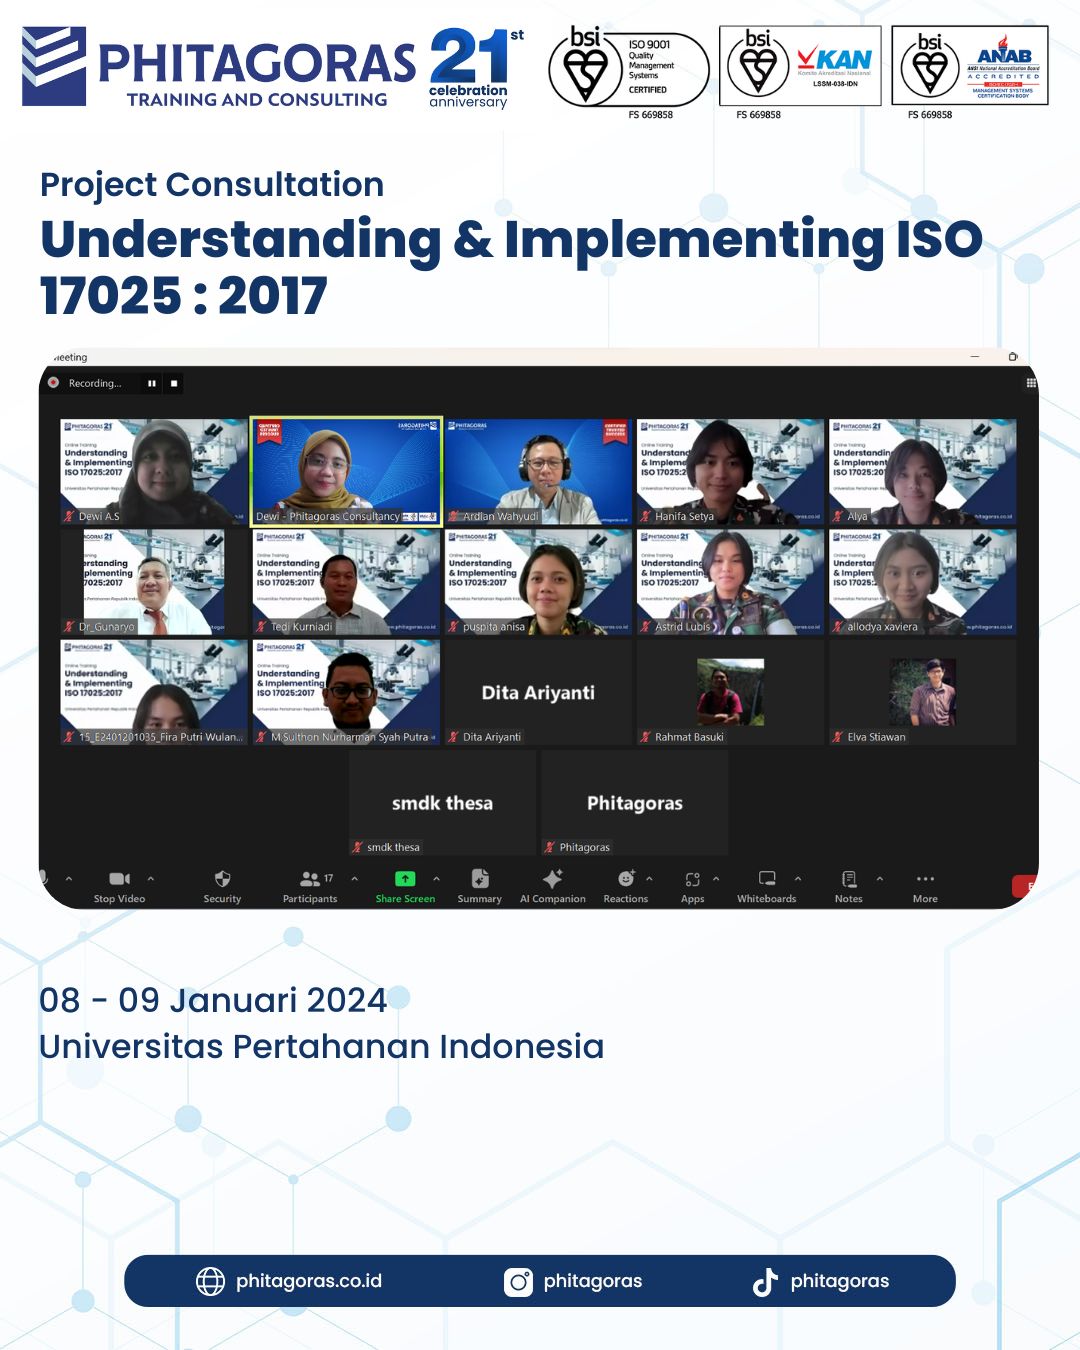 Project Consultation Understanding & Implementing ISO 17025:2017 - Universitas Pertahanan Indonesia